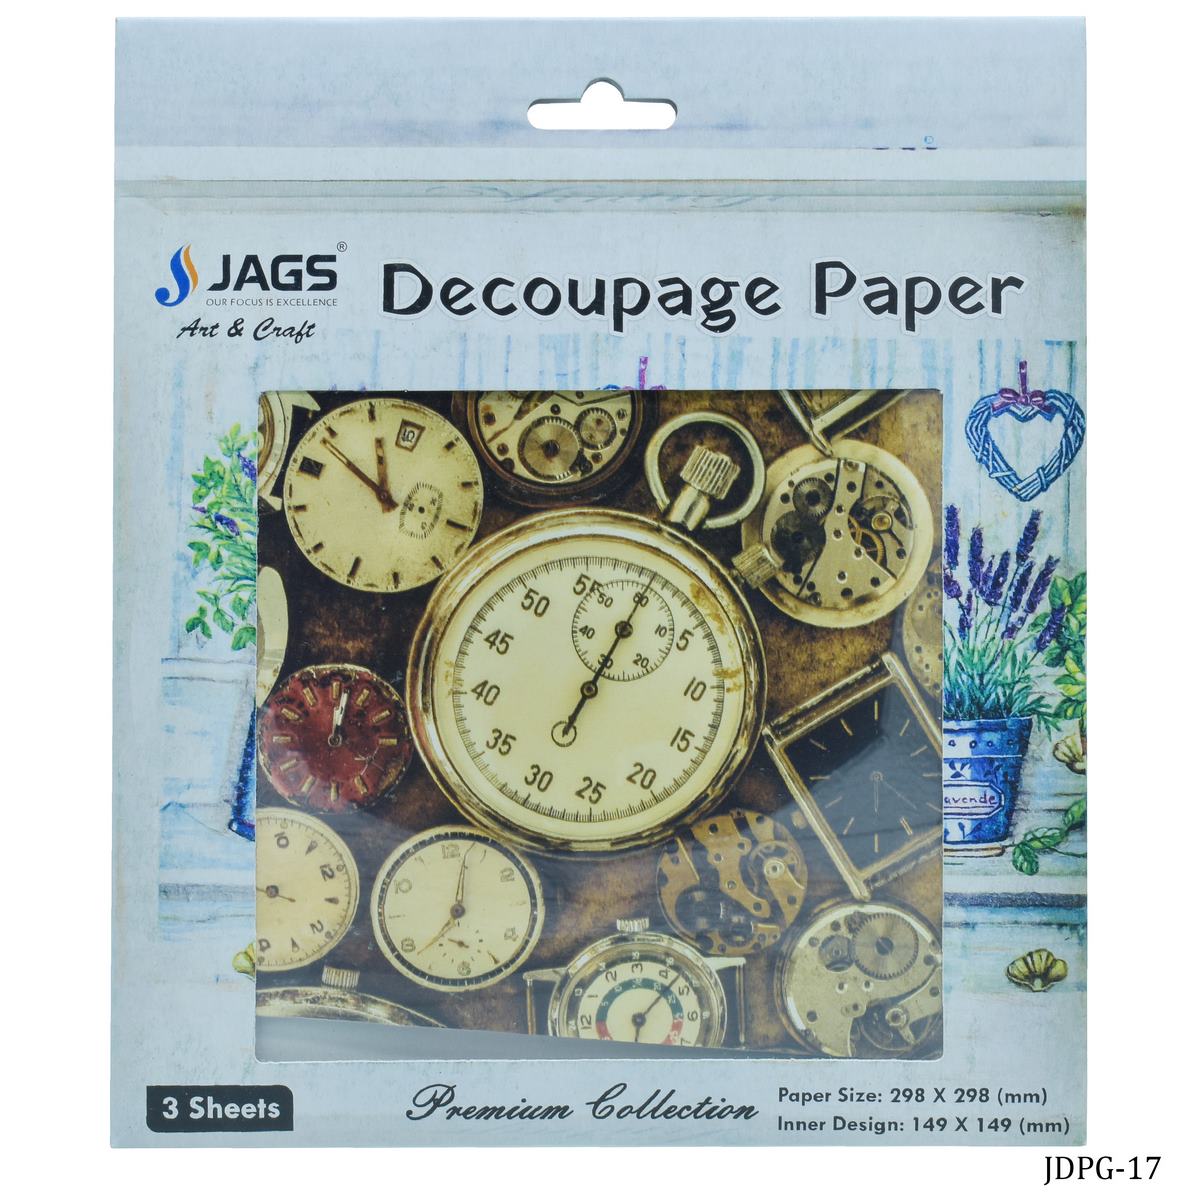 jags-mumbai Decoupage Jags Decoupage Paper V Storp Watch JDPG-17